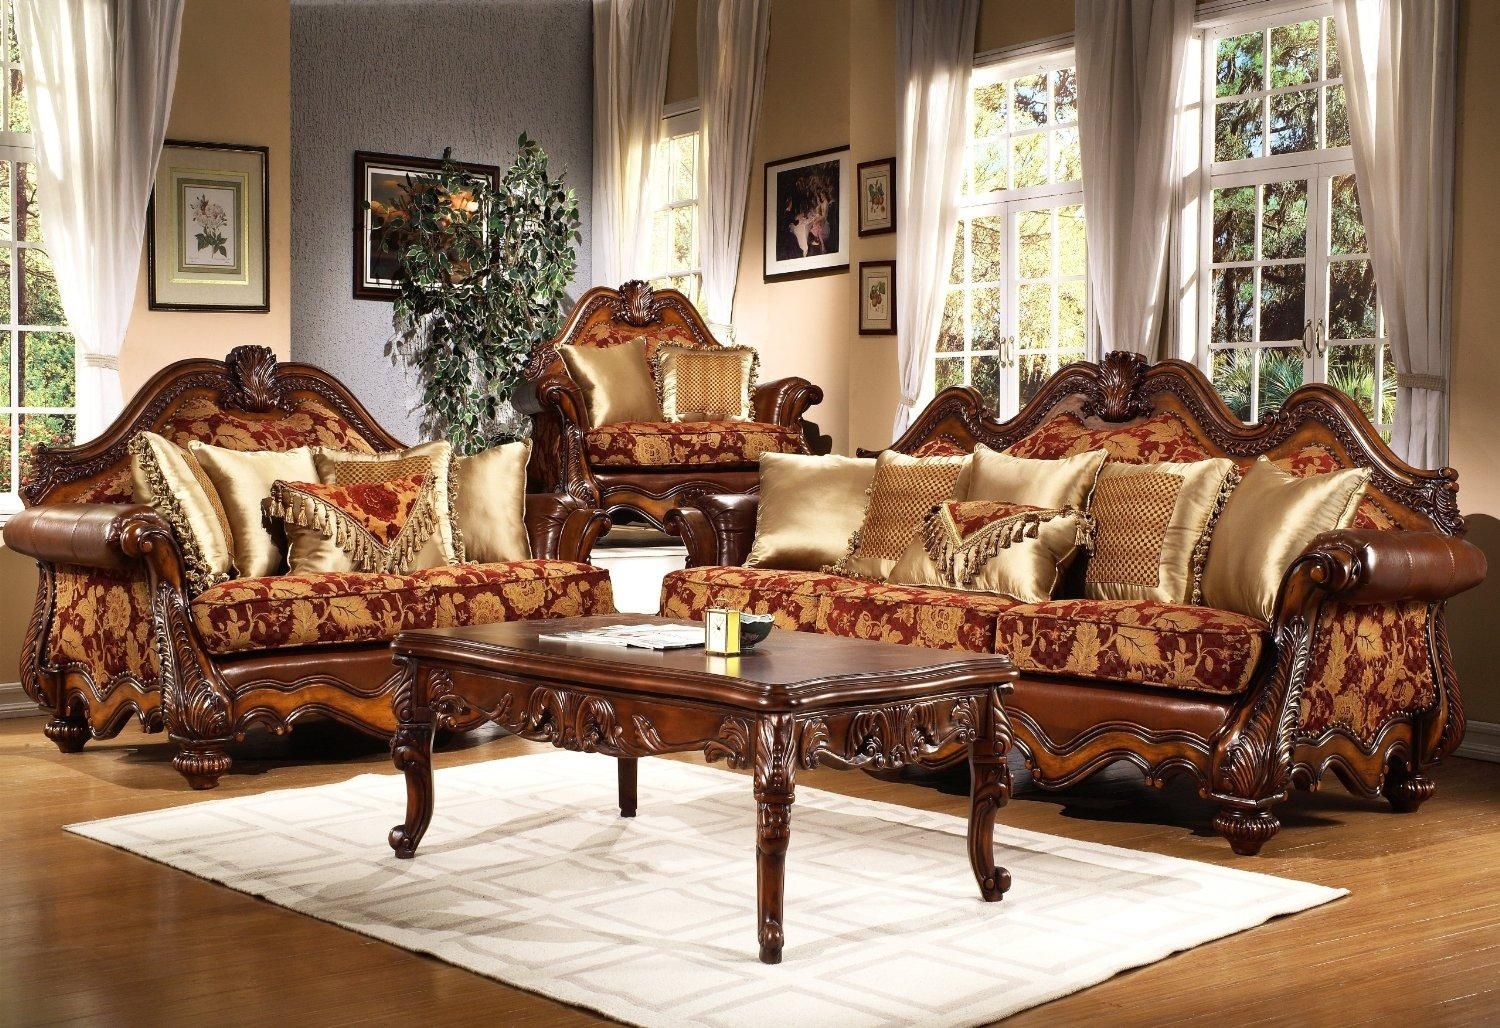 Sofas Center : Wonderfulraditional Sofa Sets Photos Design Sofas Regarding Traditional Sofas For Sale (View 15 of 20)